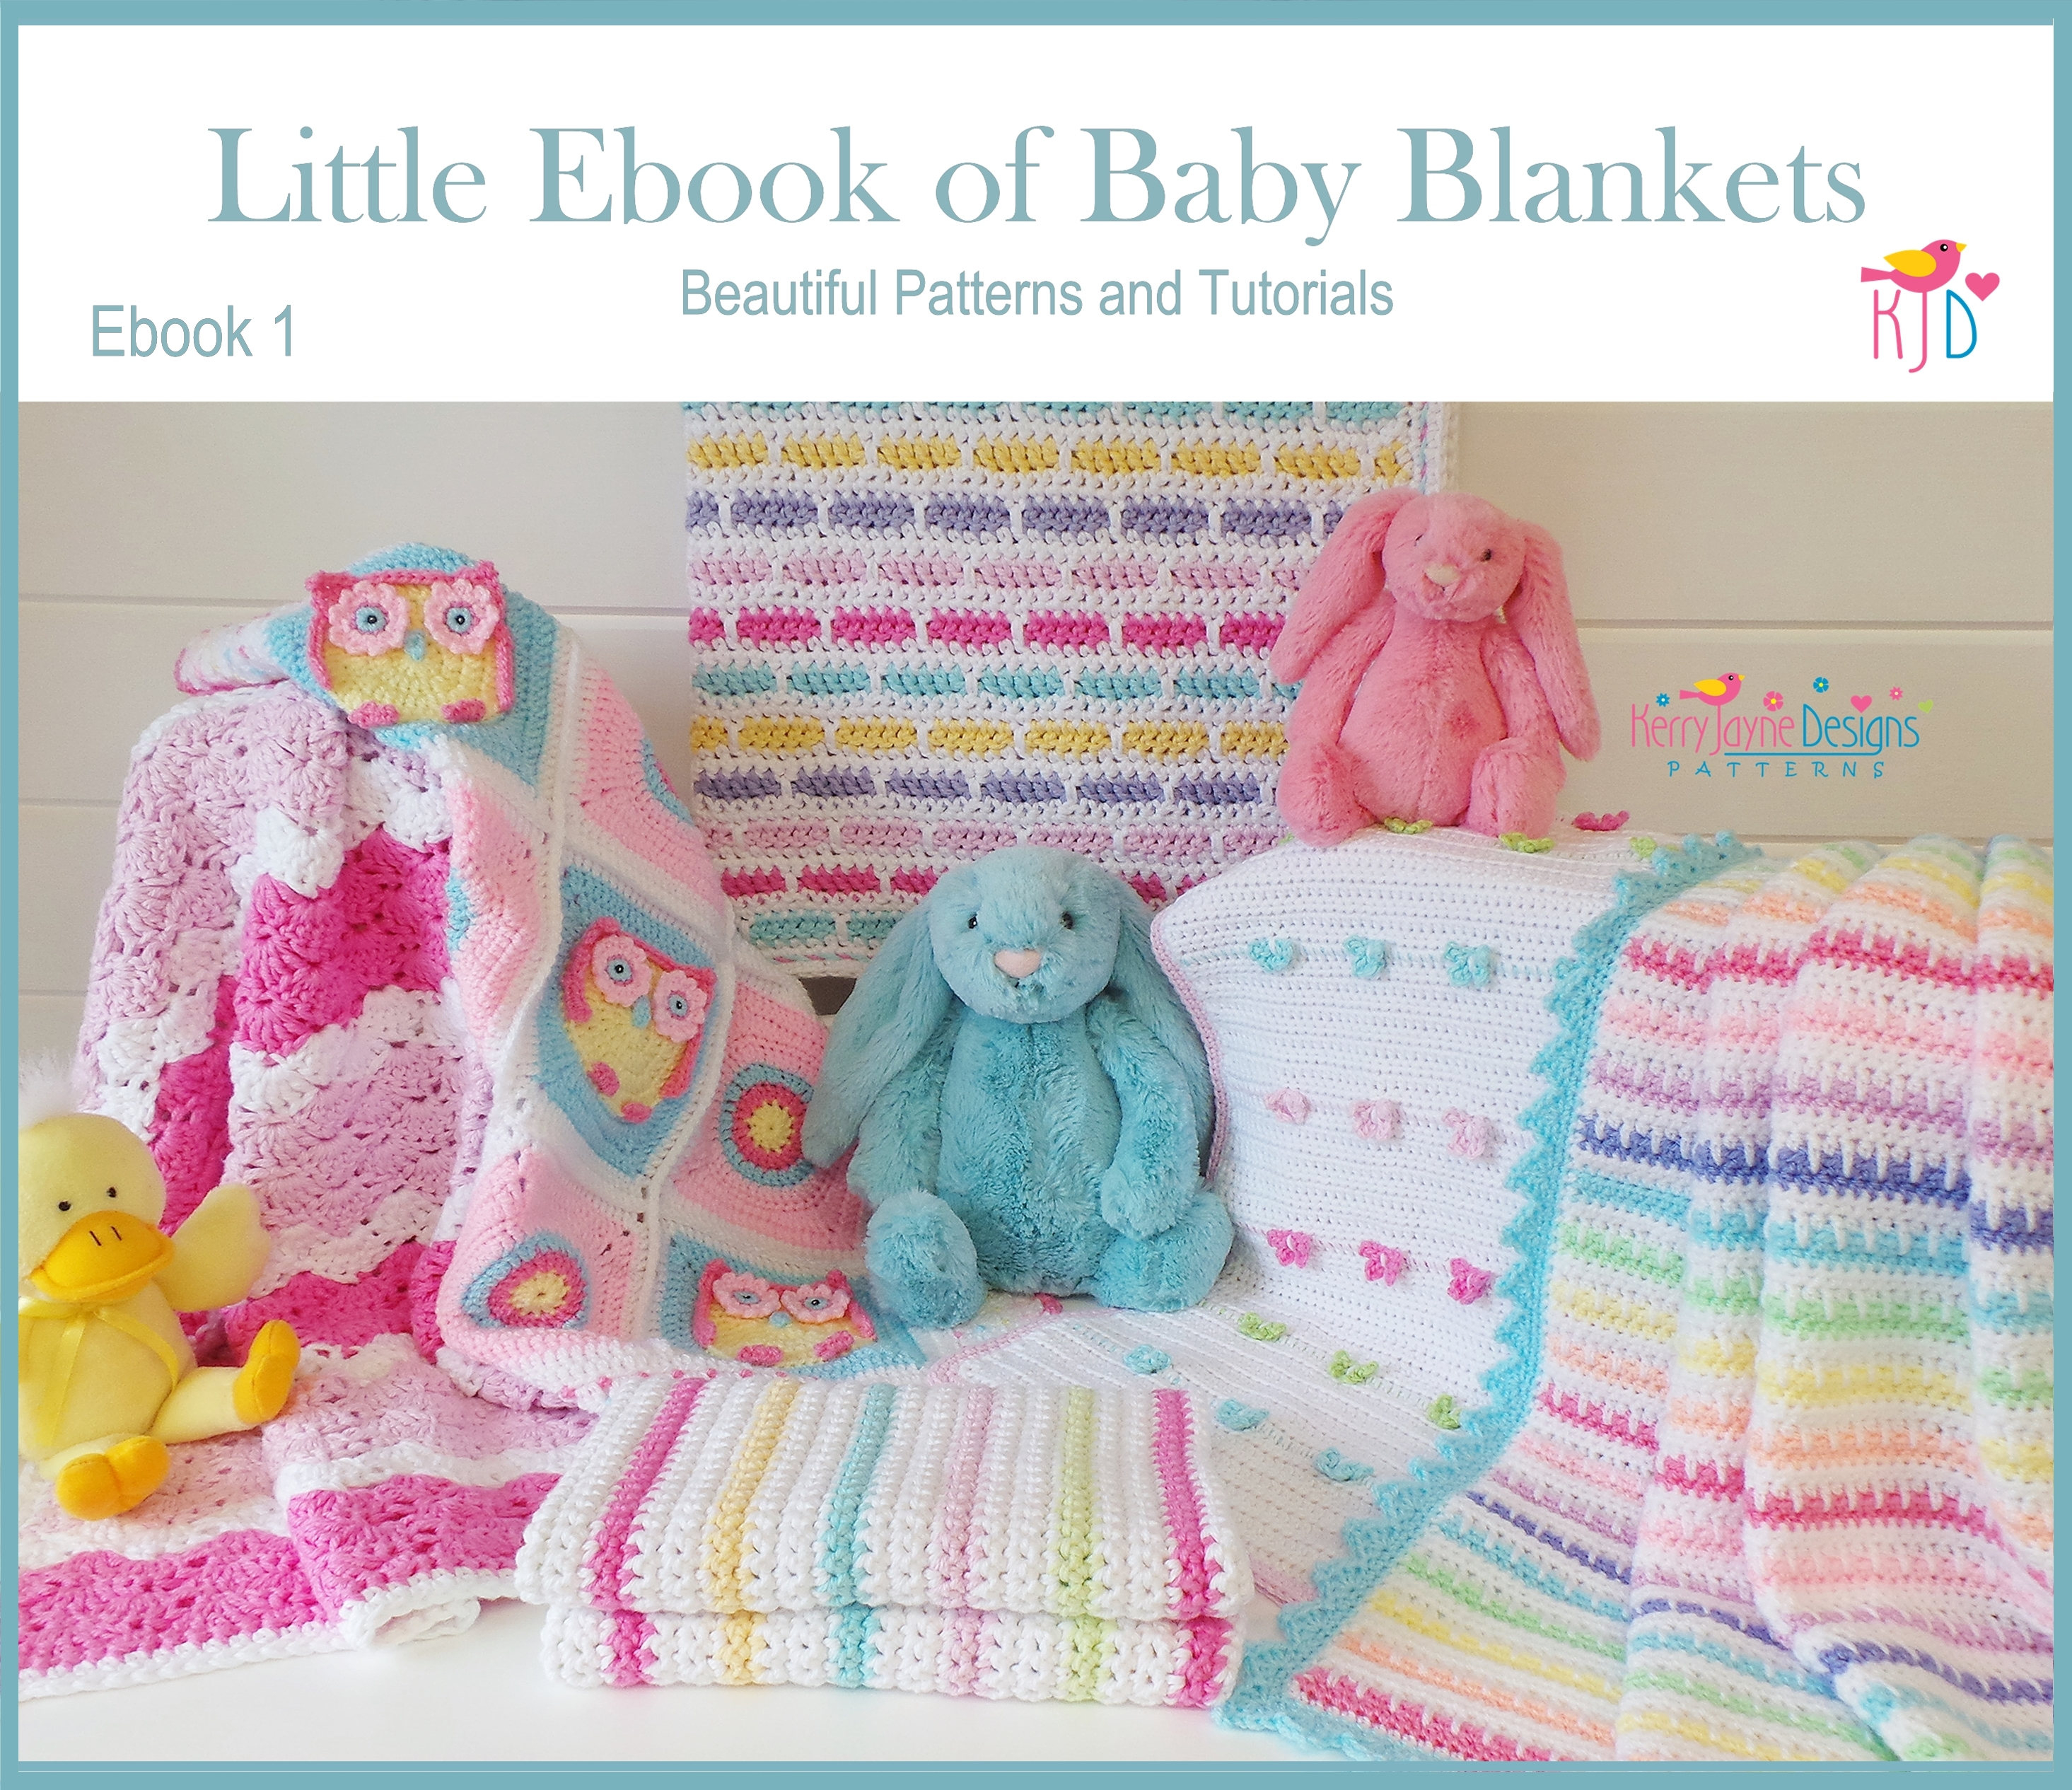 Crochet Patterns Baby Blankets Ba Blanket Ebook Of Crochet Patterns 6 Beautiful Ba Blankets And